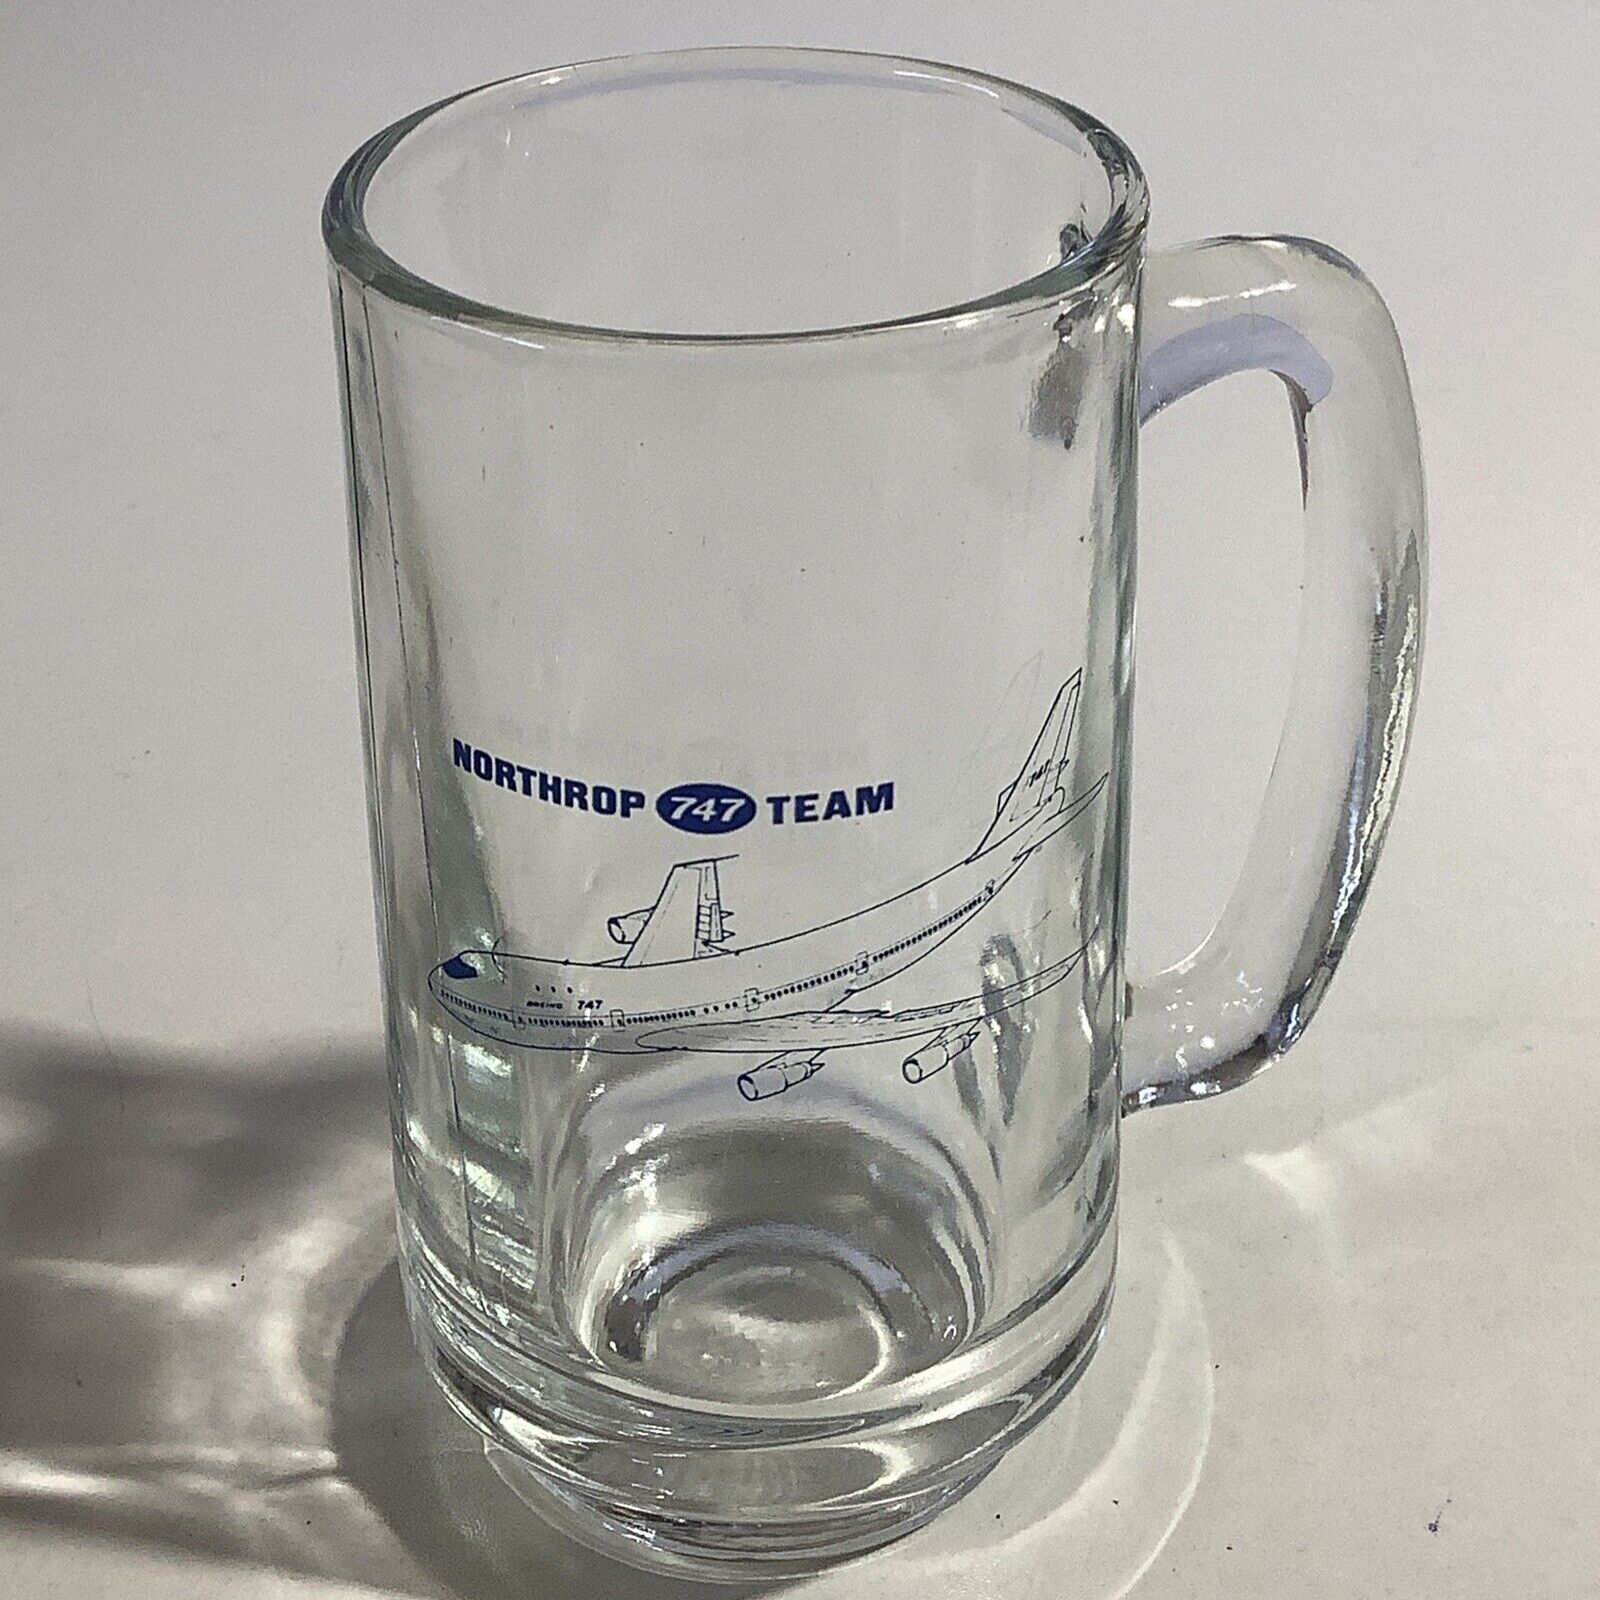 Vintage Northrop Boeing 747 Team Glass Mug